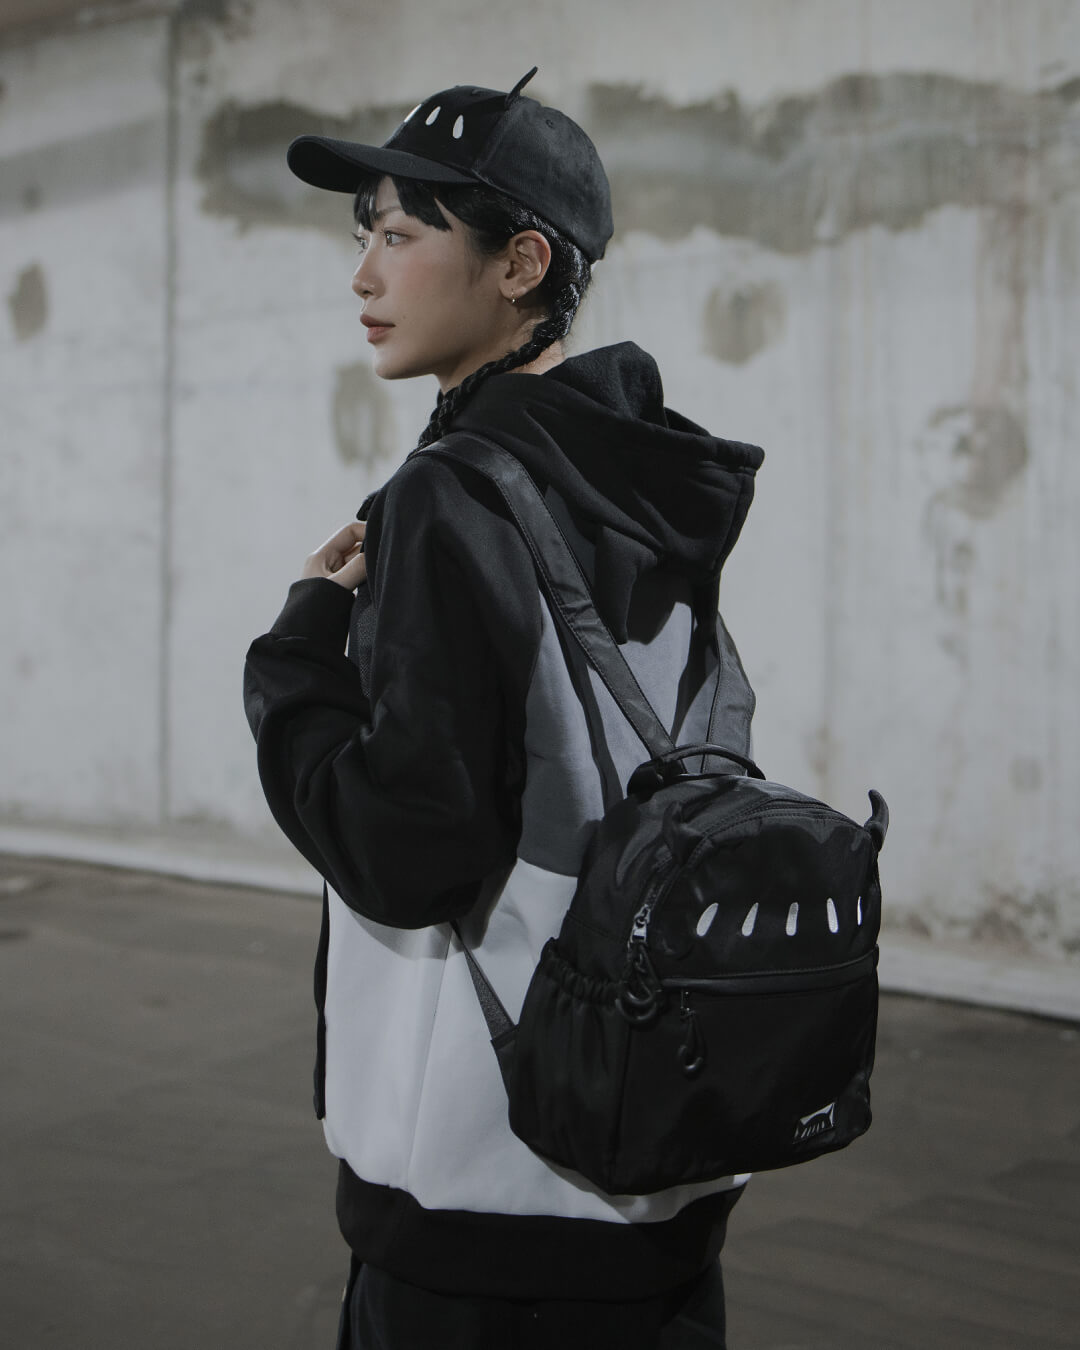 Bag: Creature Backpack